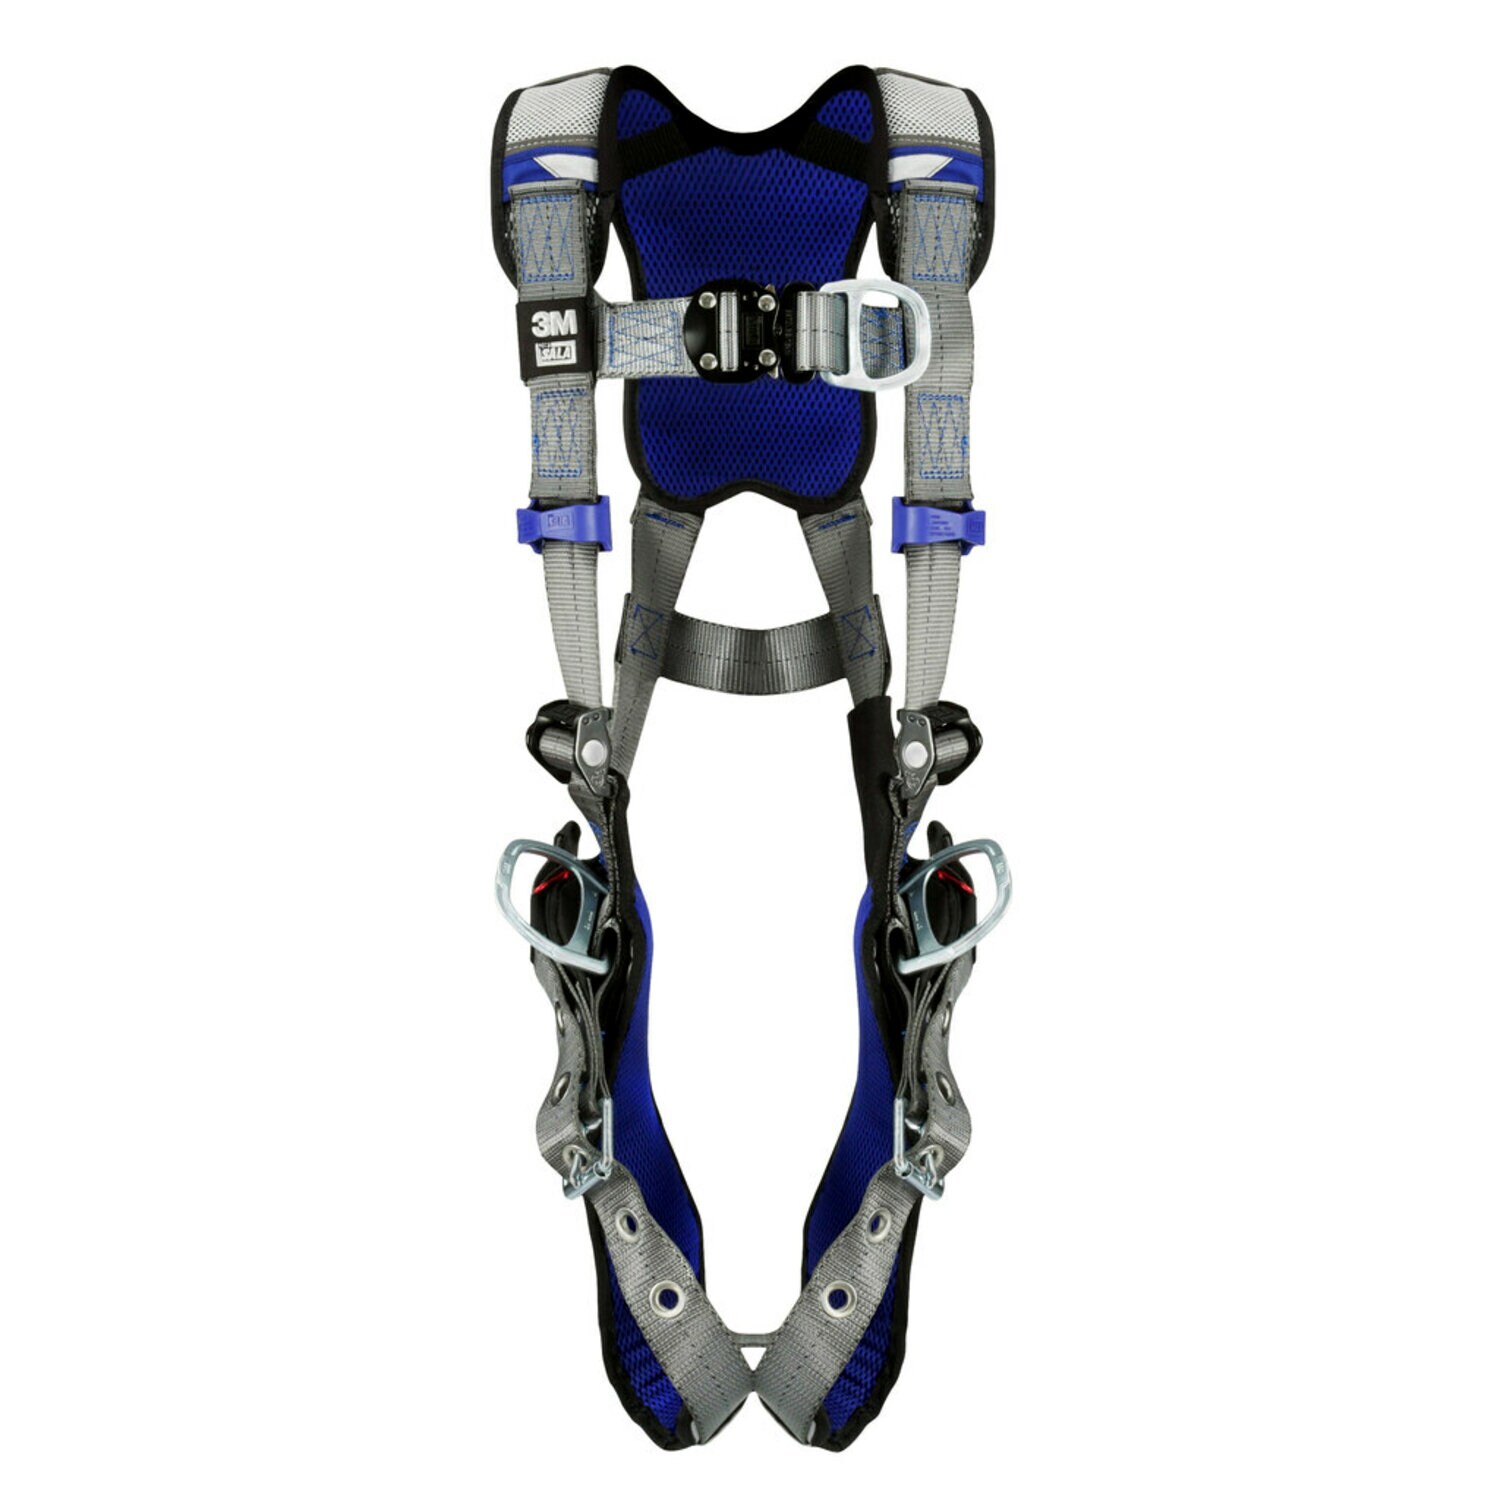 7012817746 - 3M DBI-SALA ExoFit X200 Comfort Vest Climbing/Positioning Safety Harness 1402016, Medium